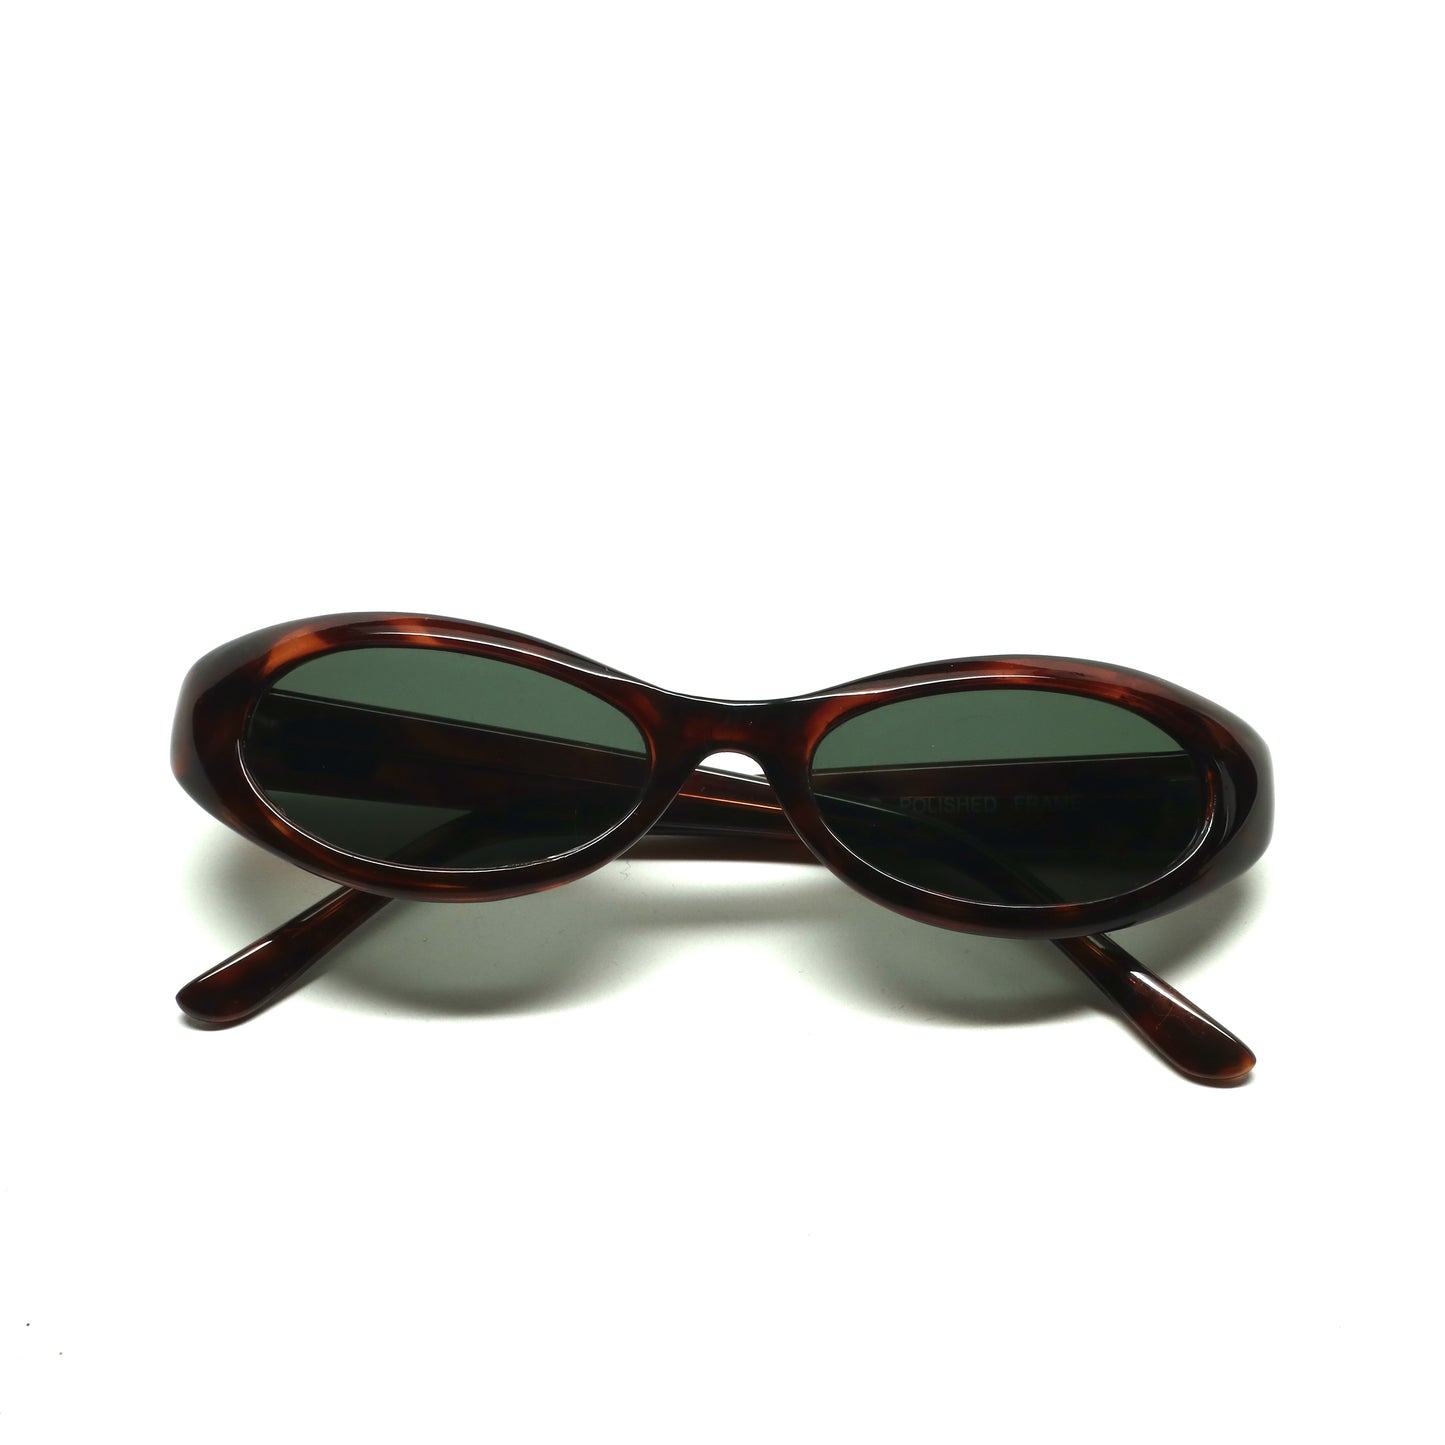 //Style 38// Vintage 90s Mod Classic Oval Frame Sunglasses - Tortoise